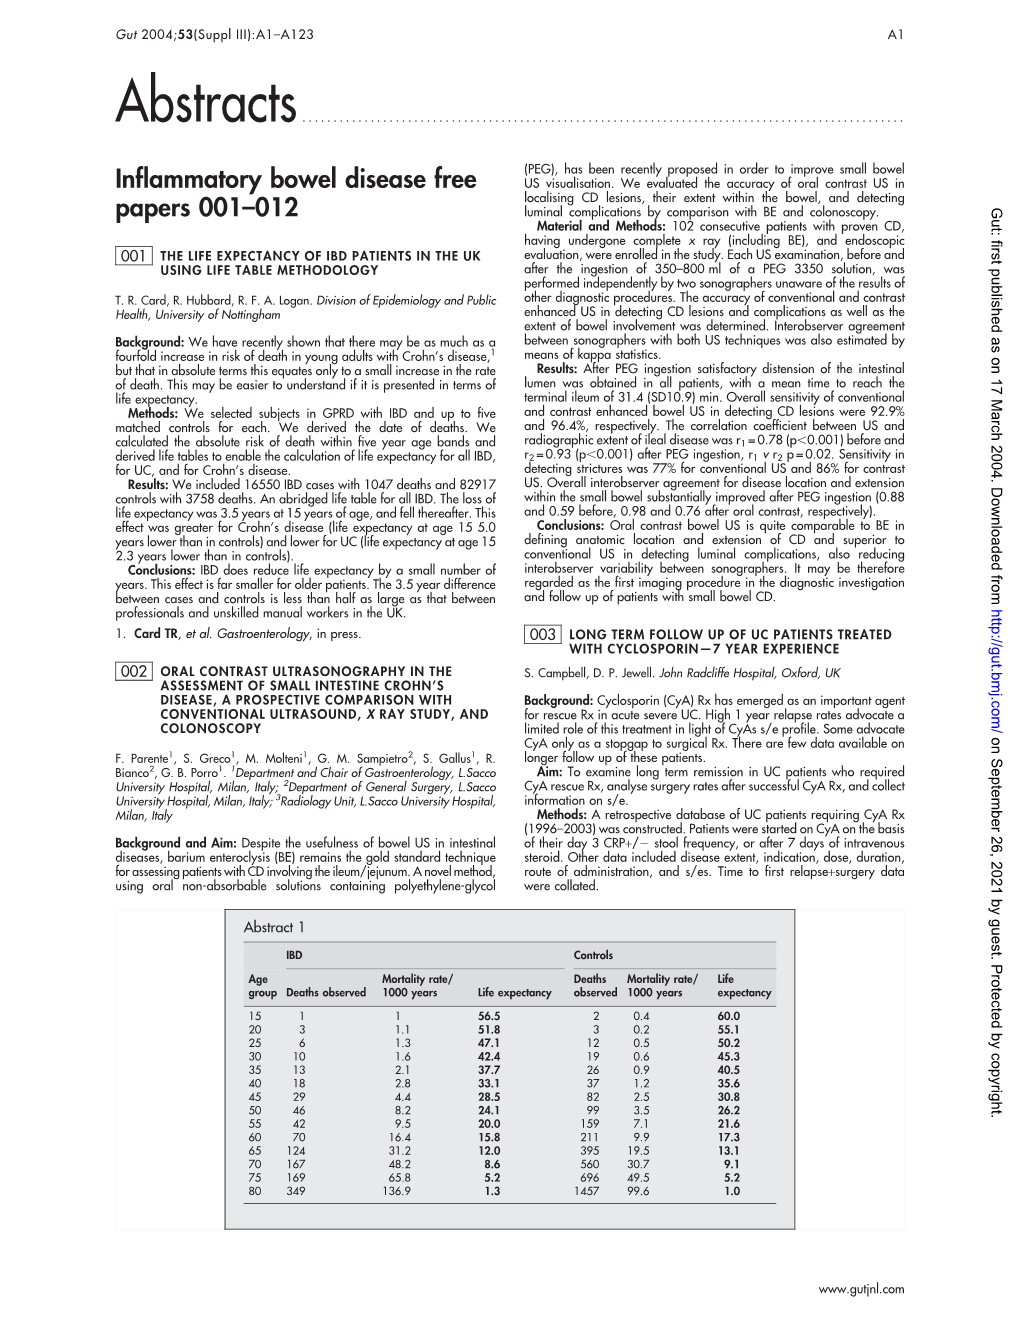 Inflammatory Bowel Disease Free Papers 001–012